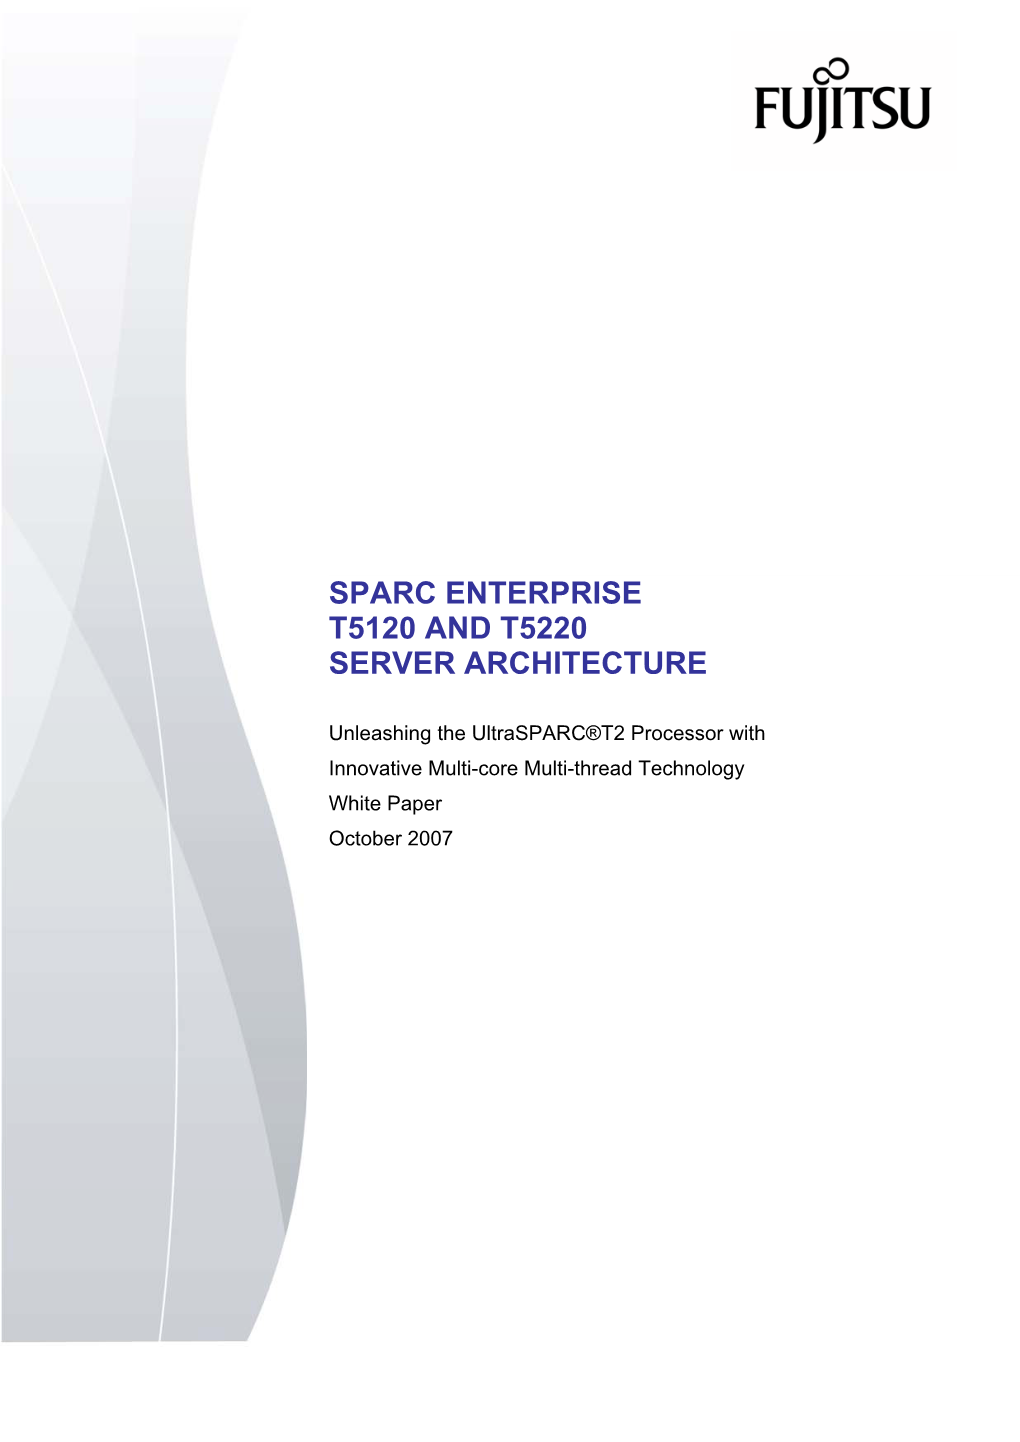 Sun SPARC Enterprise T5120/T5220サーバ・アーキテクチャ